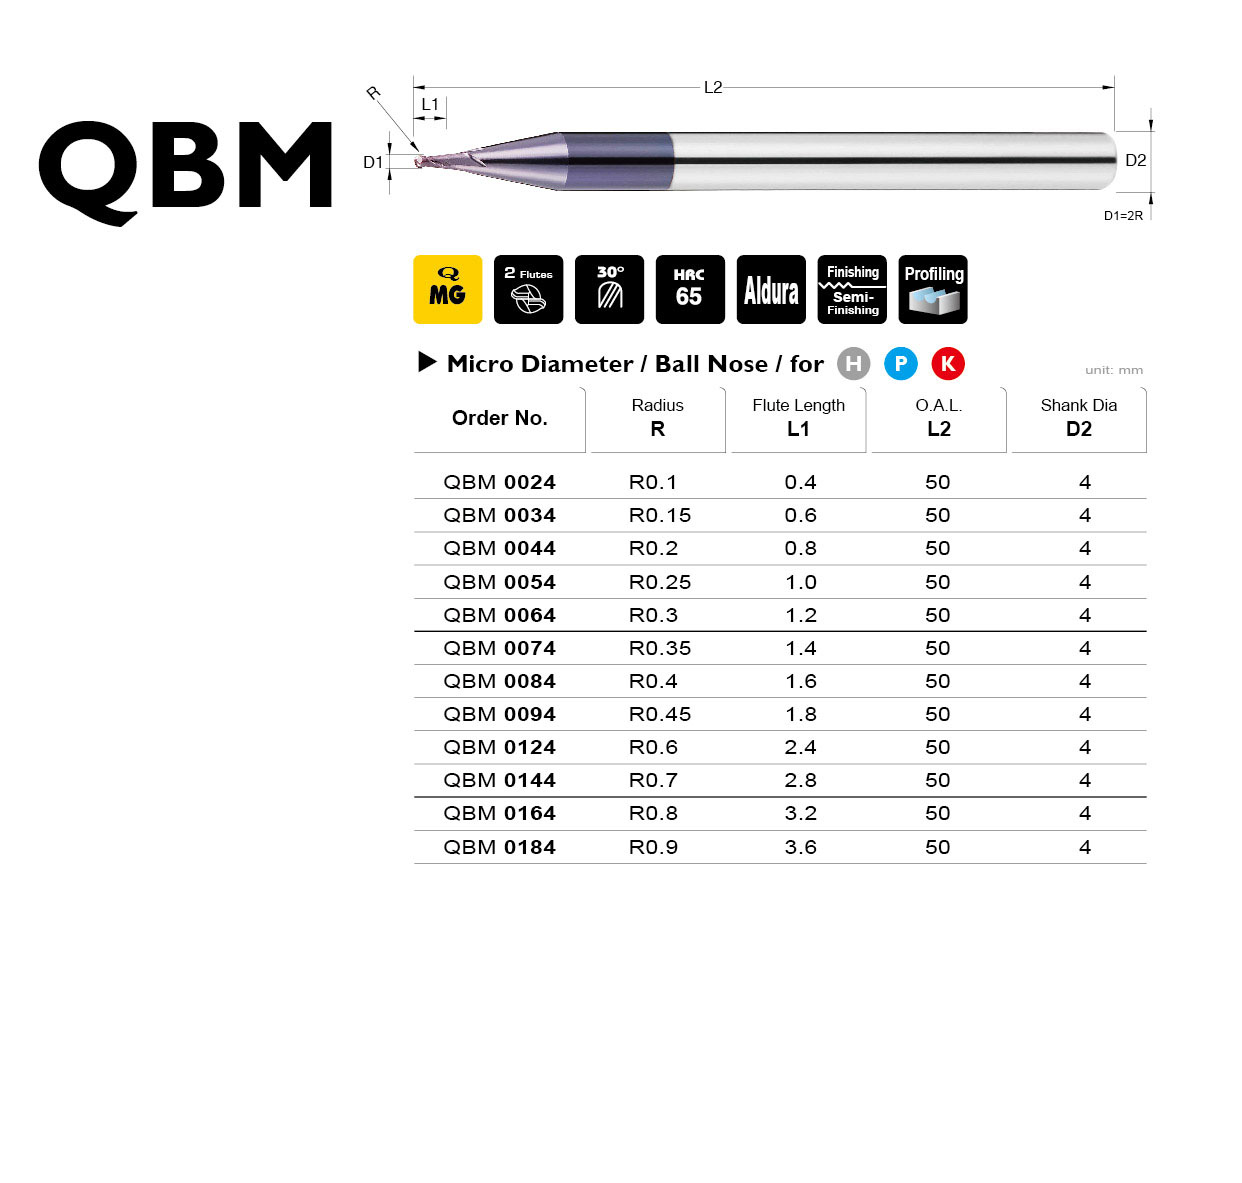 Catalog|QBM series